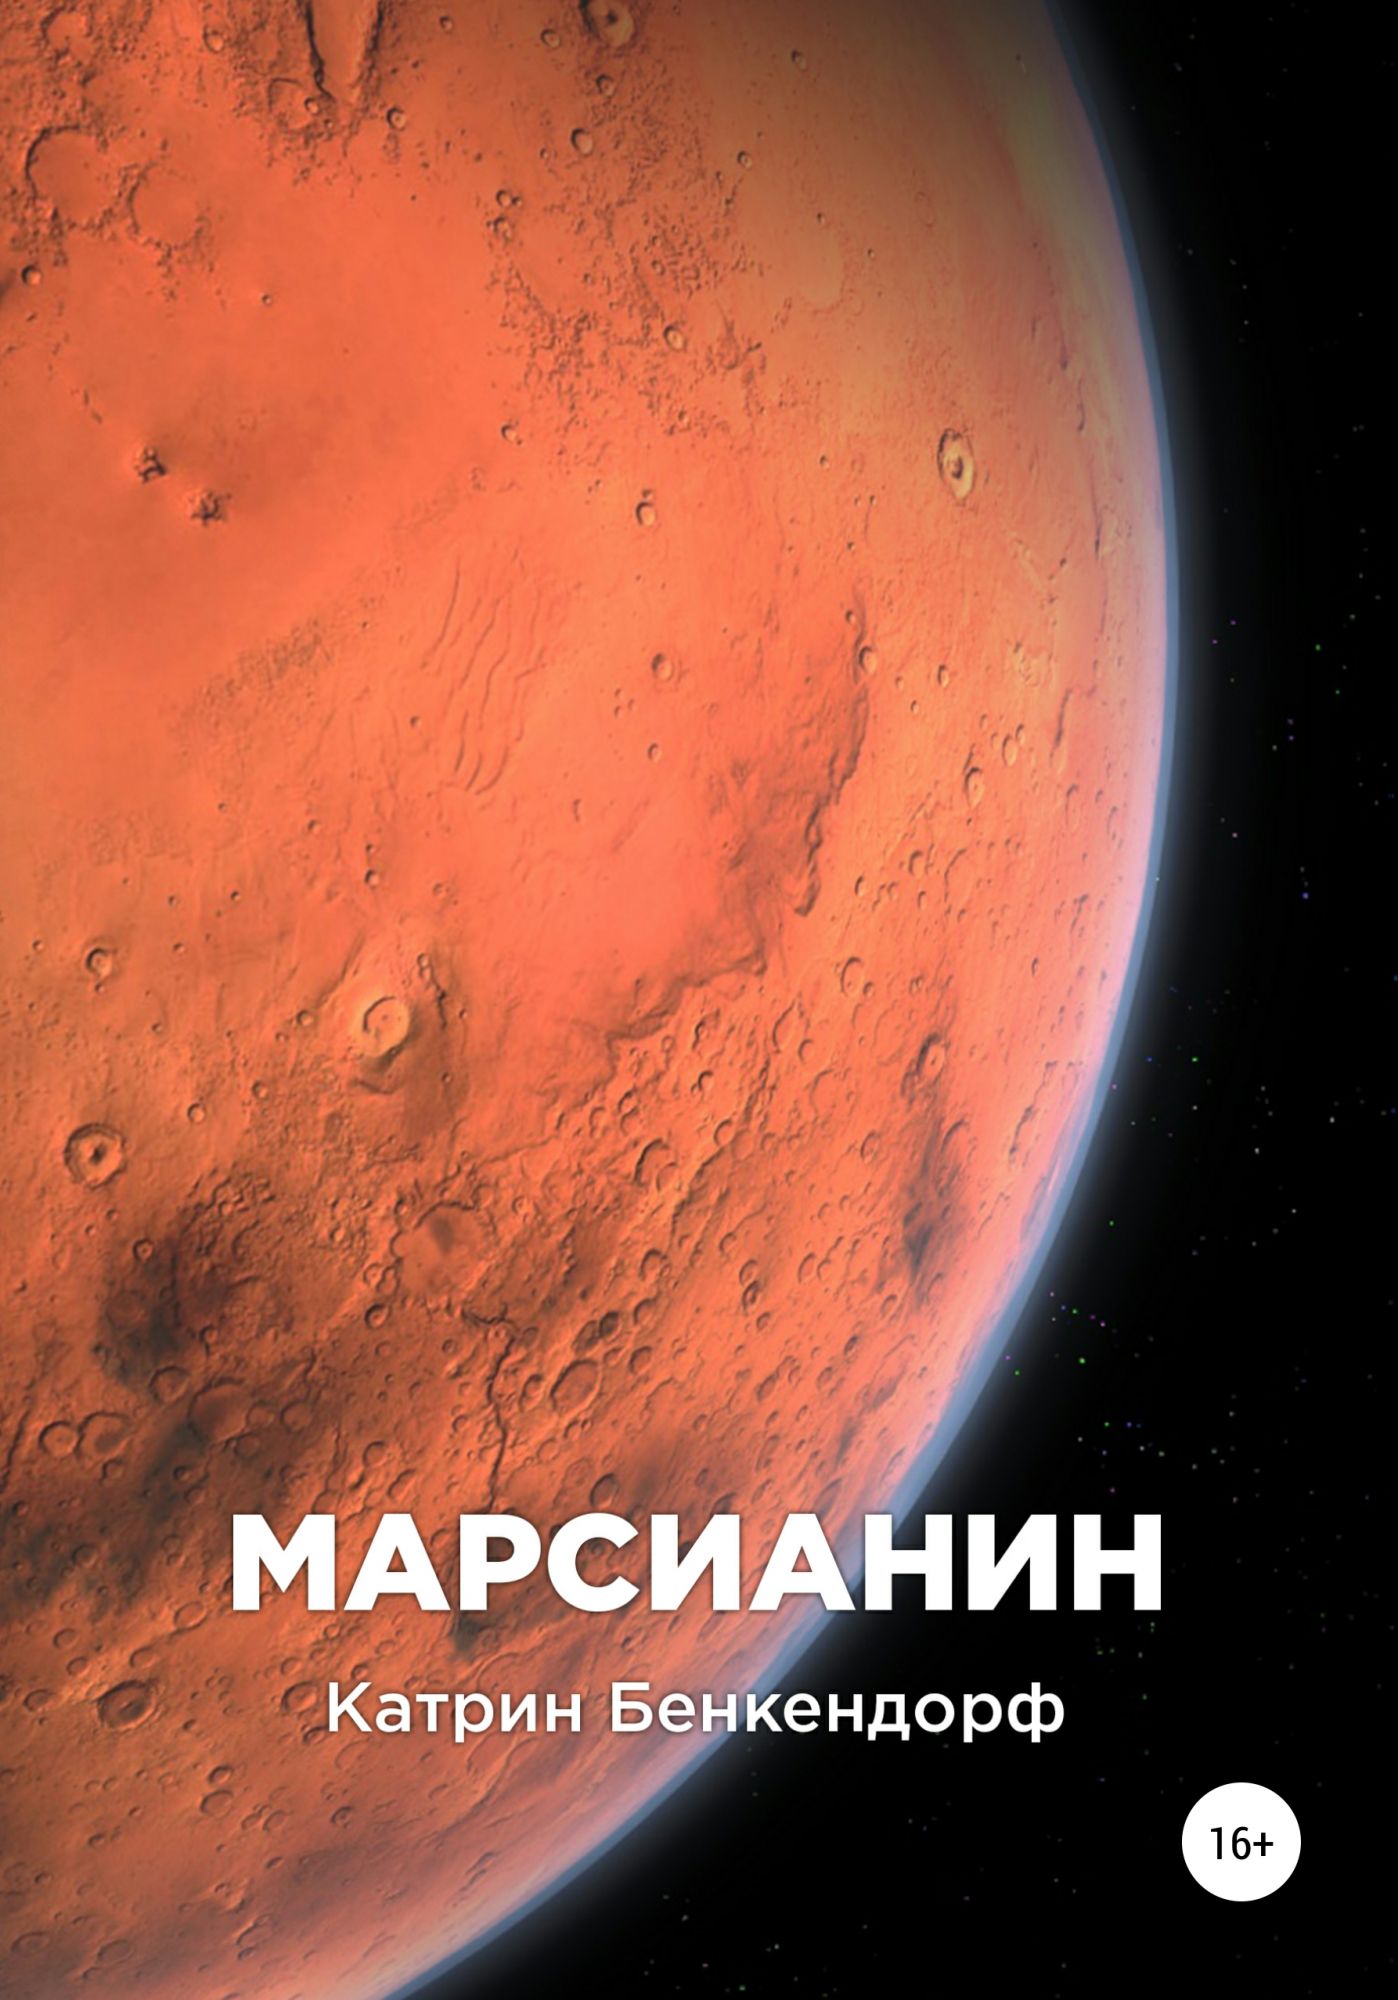 Марсианин книга. Марсианин книга купить. Путь марсиан книга. Книга Марсианин Стикеры.